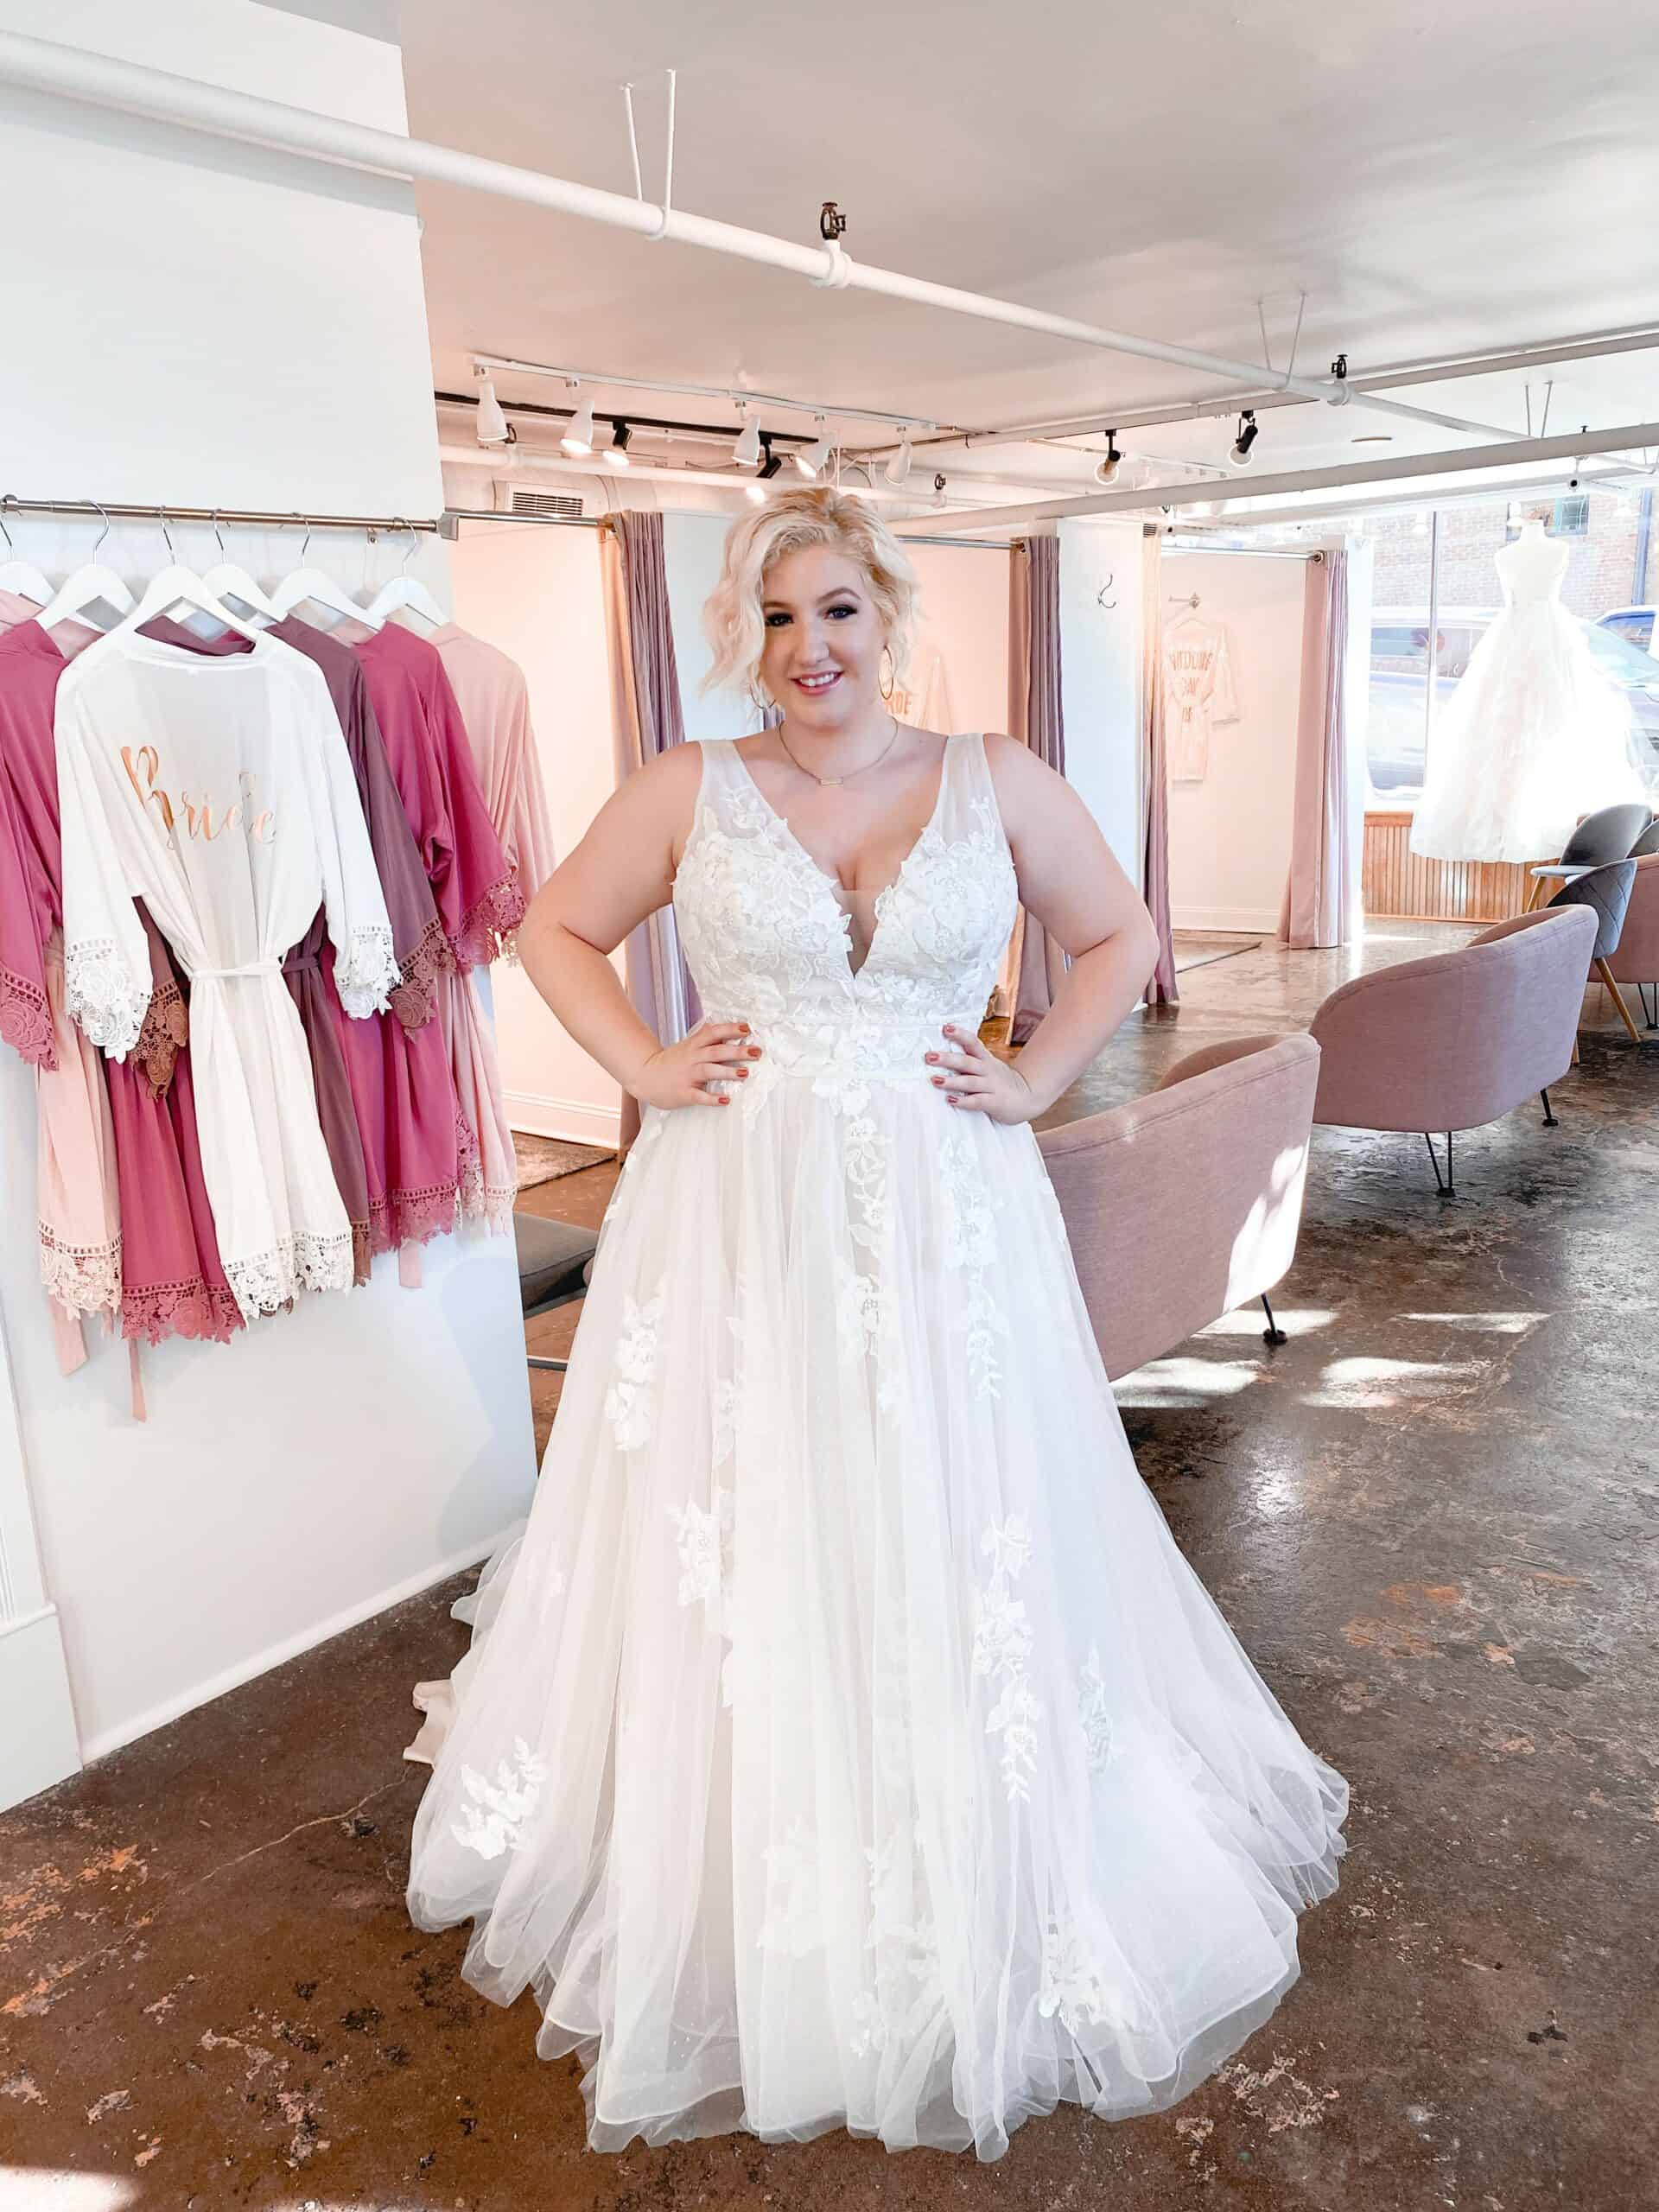 Plus-Size Wedding Dresses Guide For Curvy Brides!